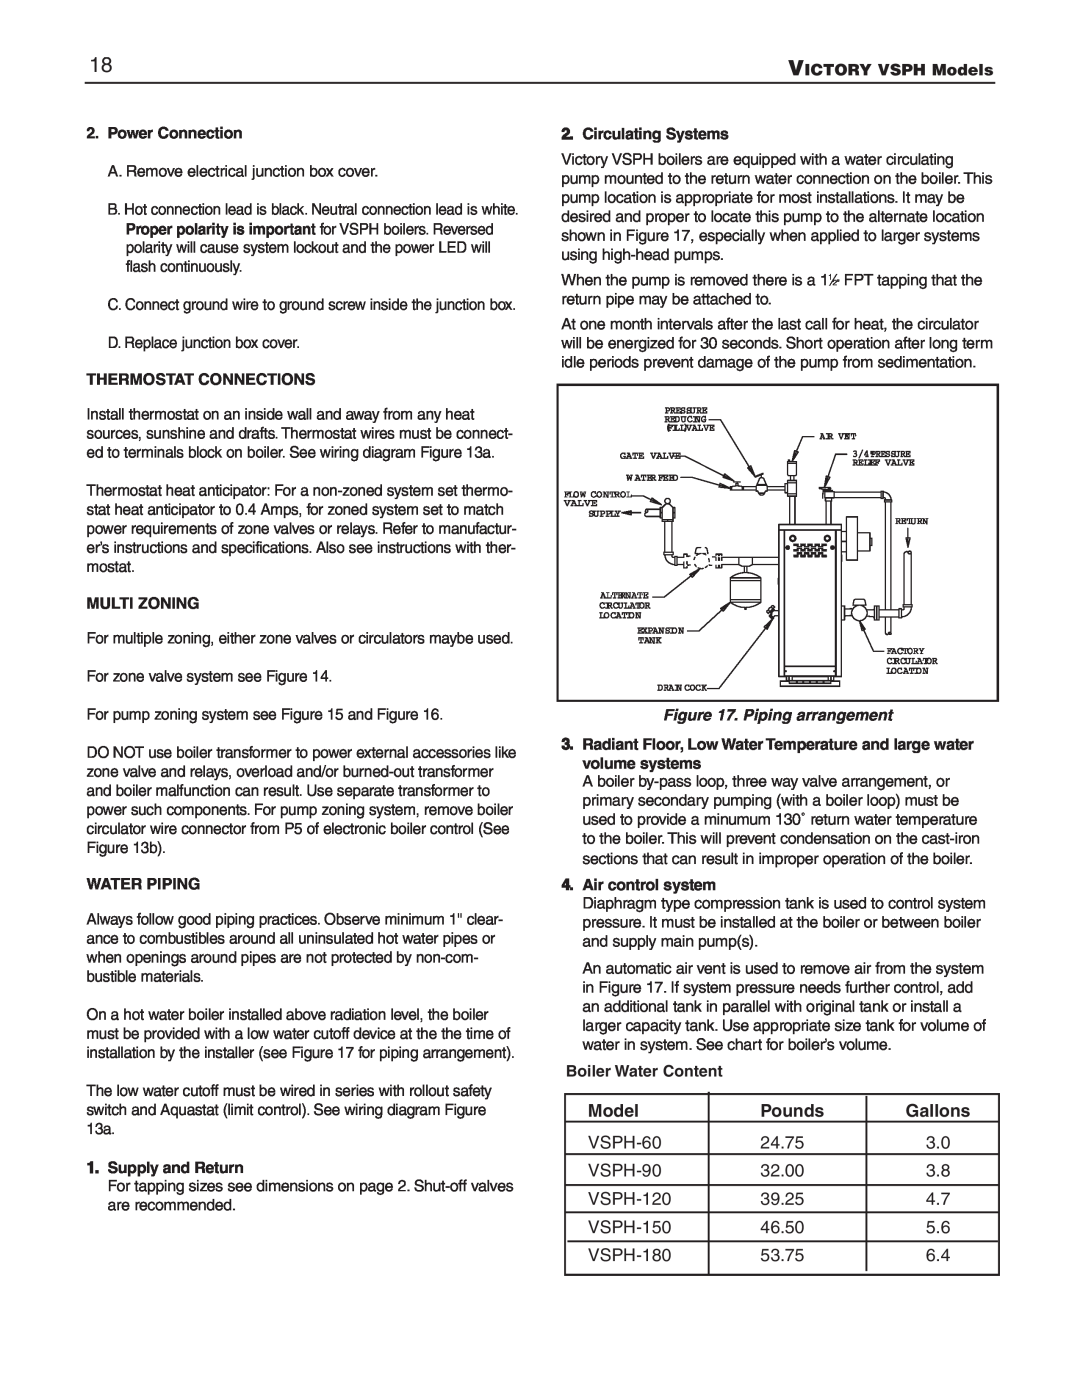 Slant/Fin VSPH-60, VSPH-180 operating instructions Model, Pounds, Gallons, Piping arrangement 